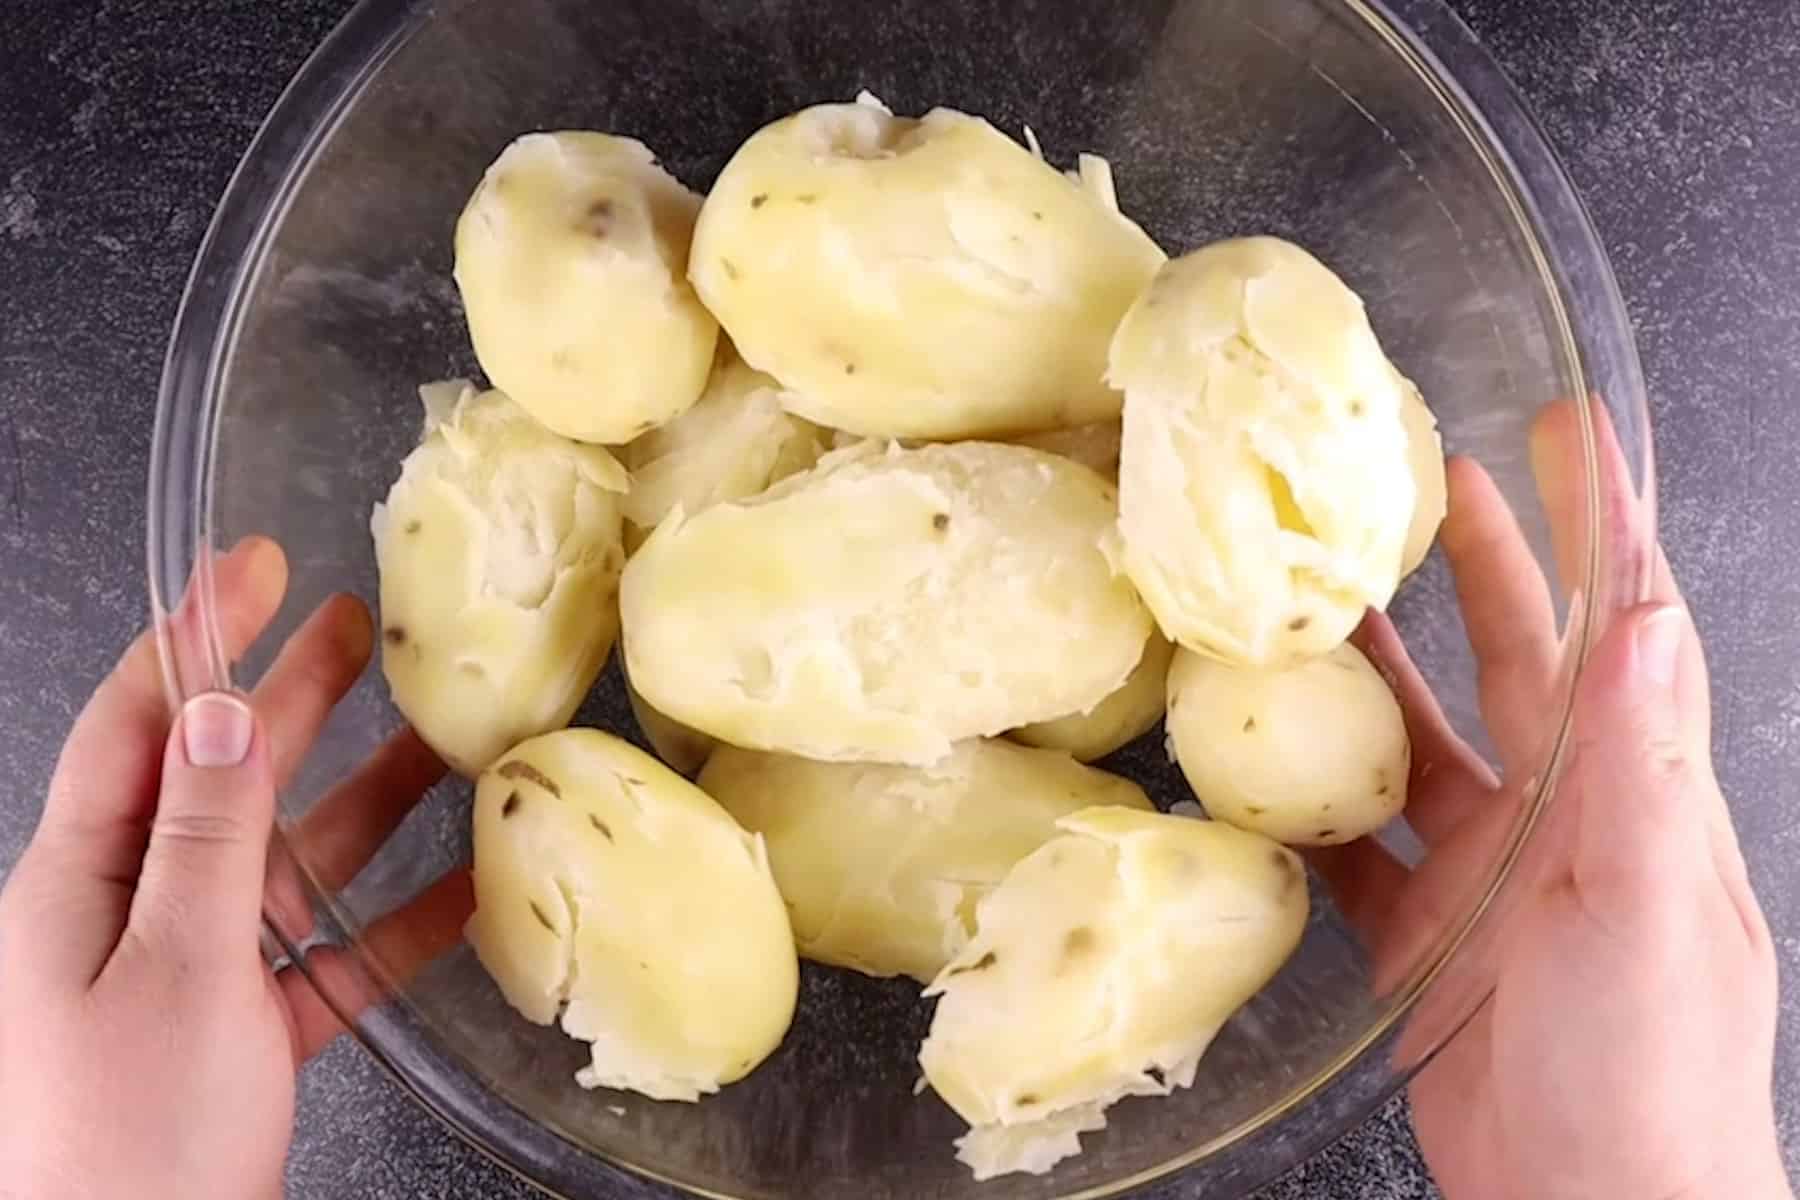 peeled and boiled potatoes